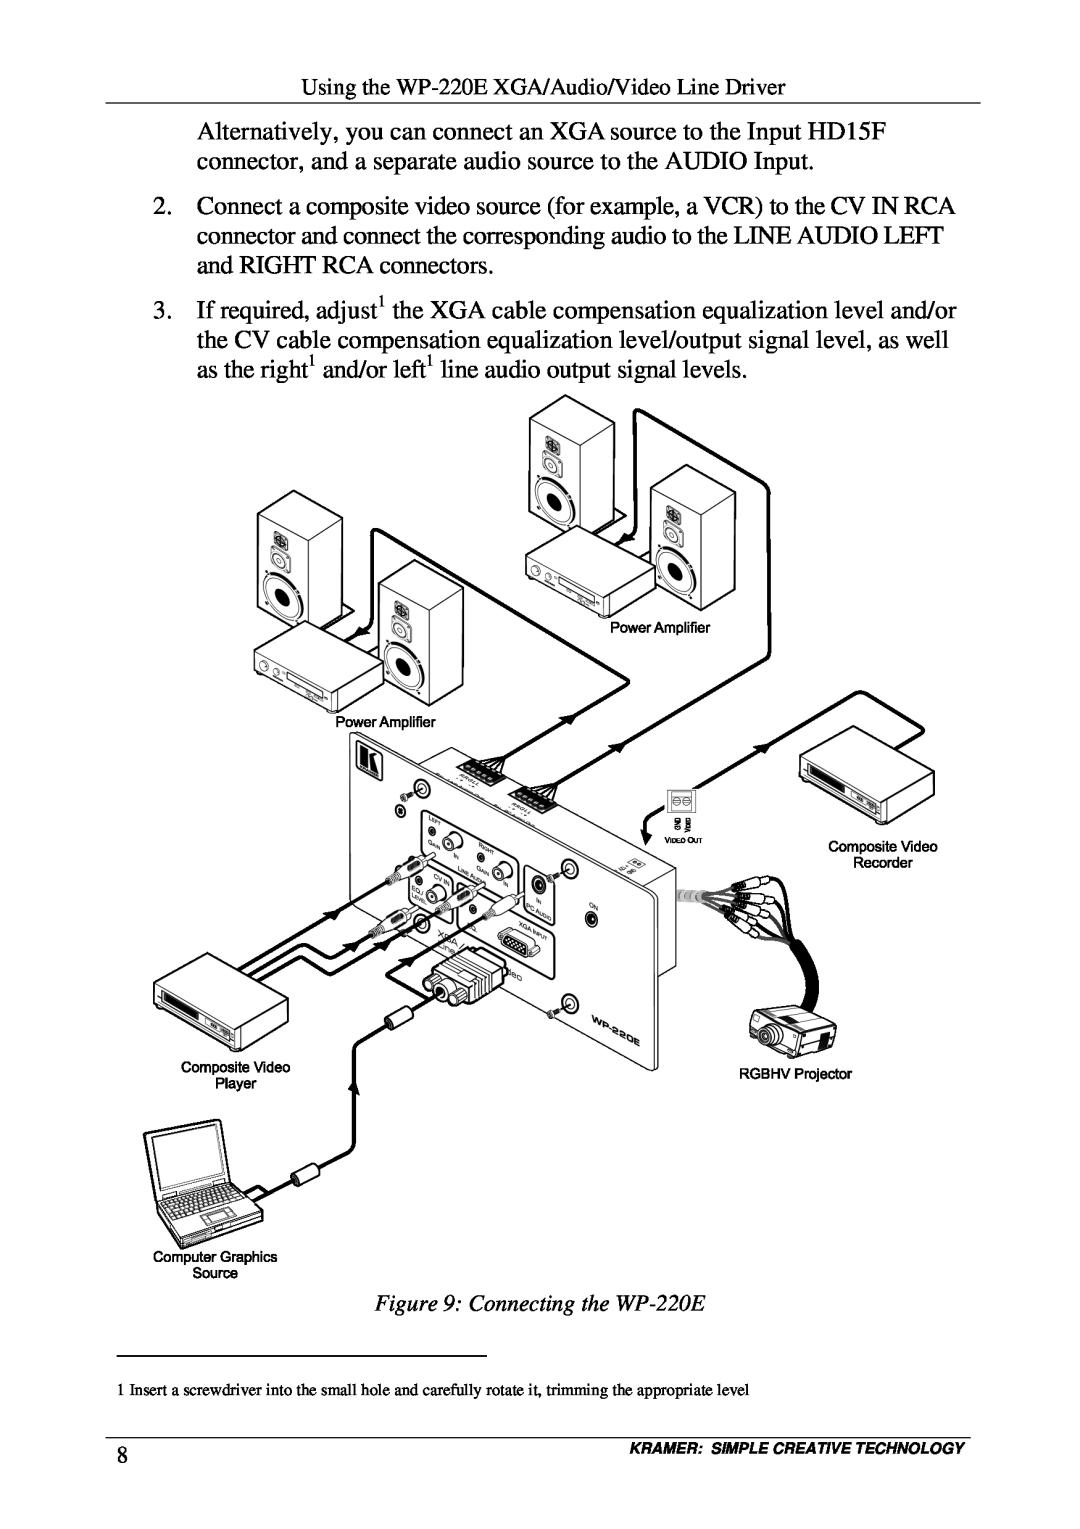 Kramer Electronics user manual Connecting the WP-220E 